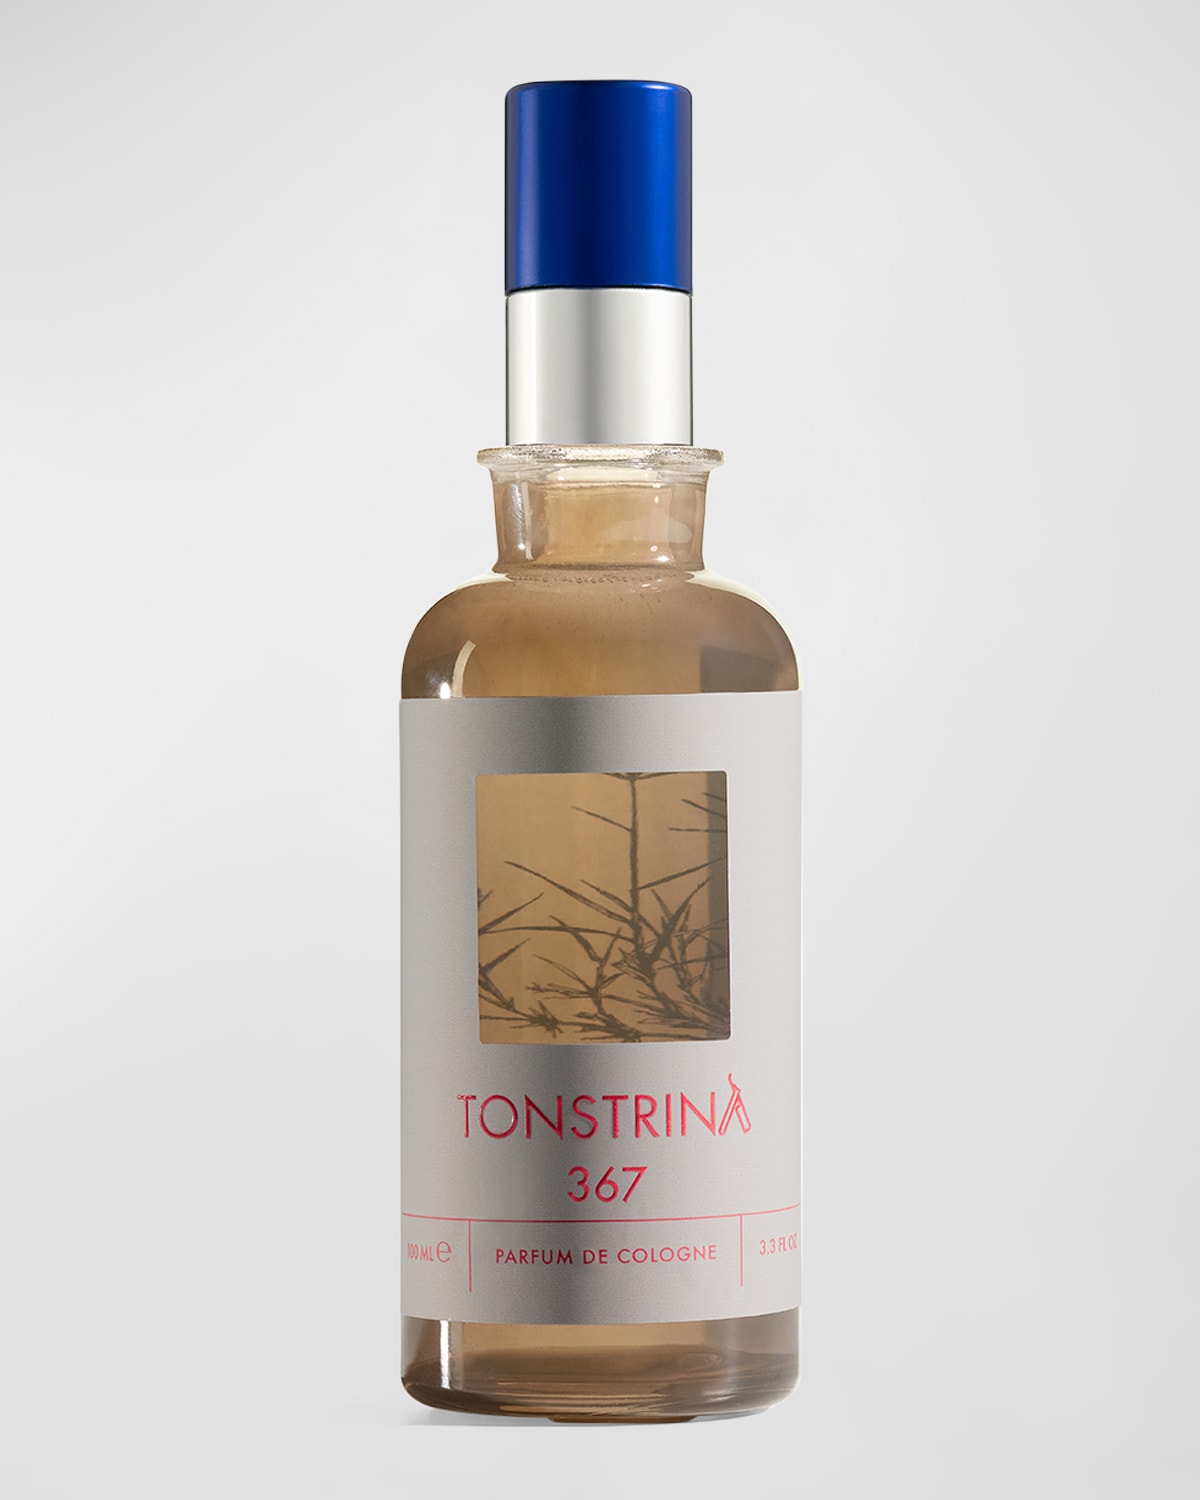 Tonstrina 367 Parfum de Cologne, 3.3 oz.